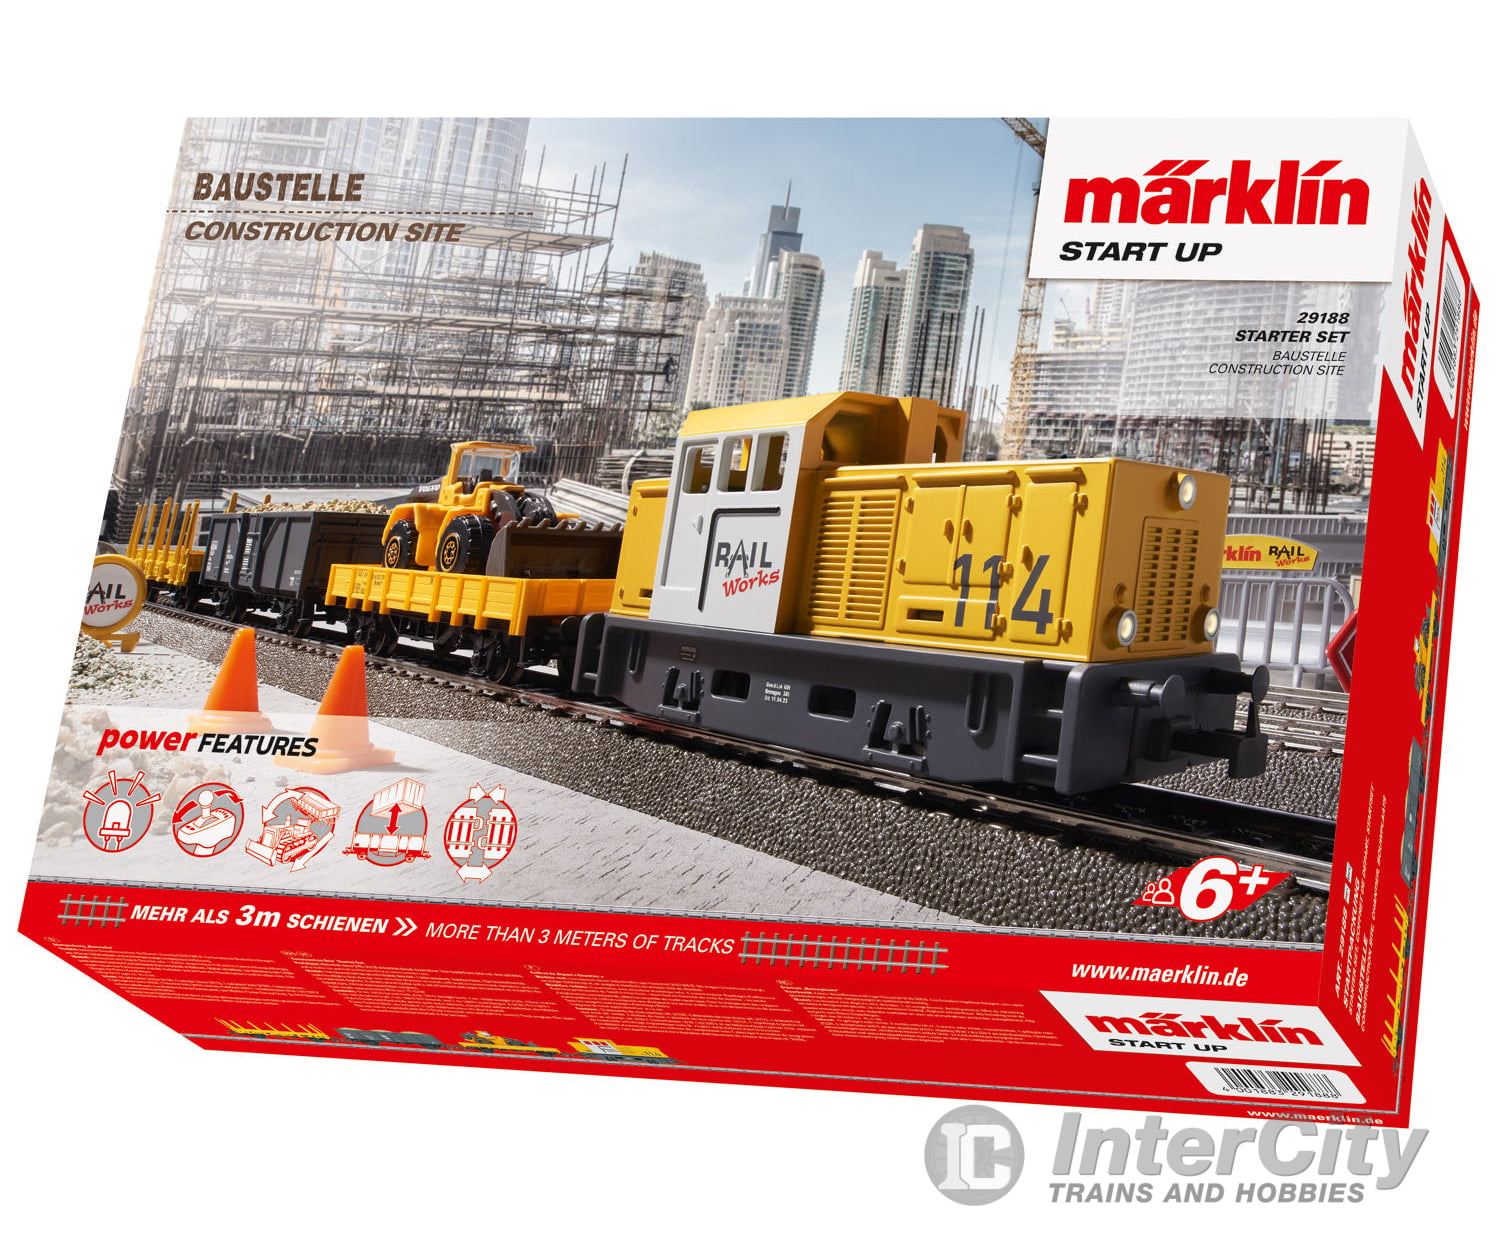 Marklin 29188 Marklin Start up - "Construction Site" Starter Set - Default Title (IC-MARK-29188)